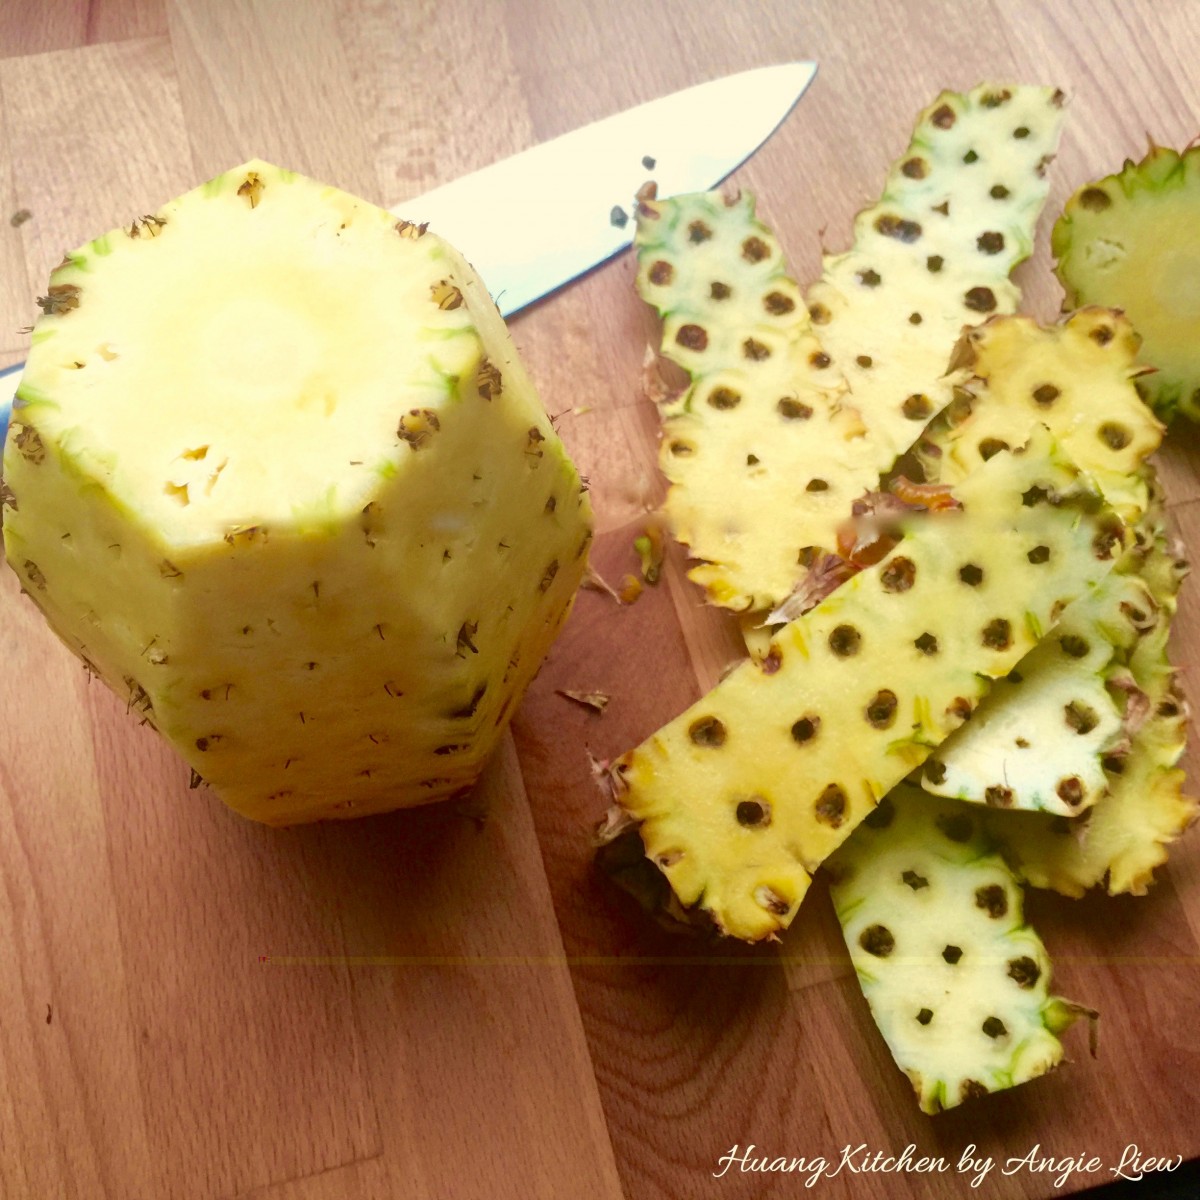 Pineapple Jam Recipe - remove pineapple skin